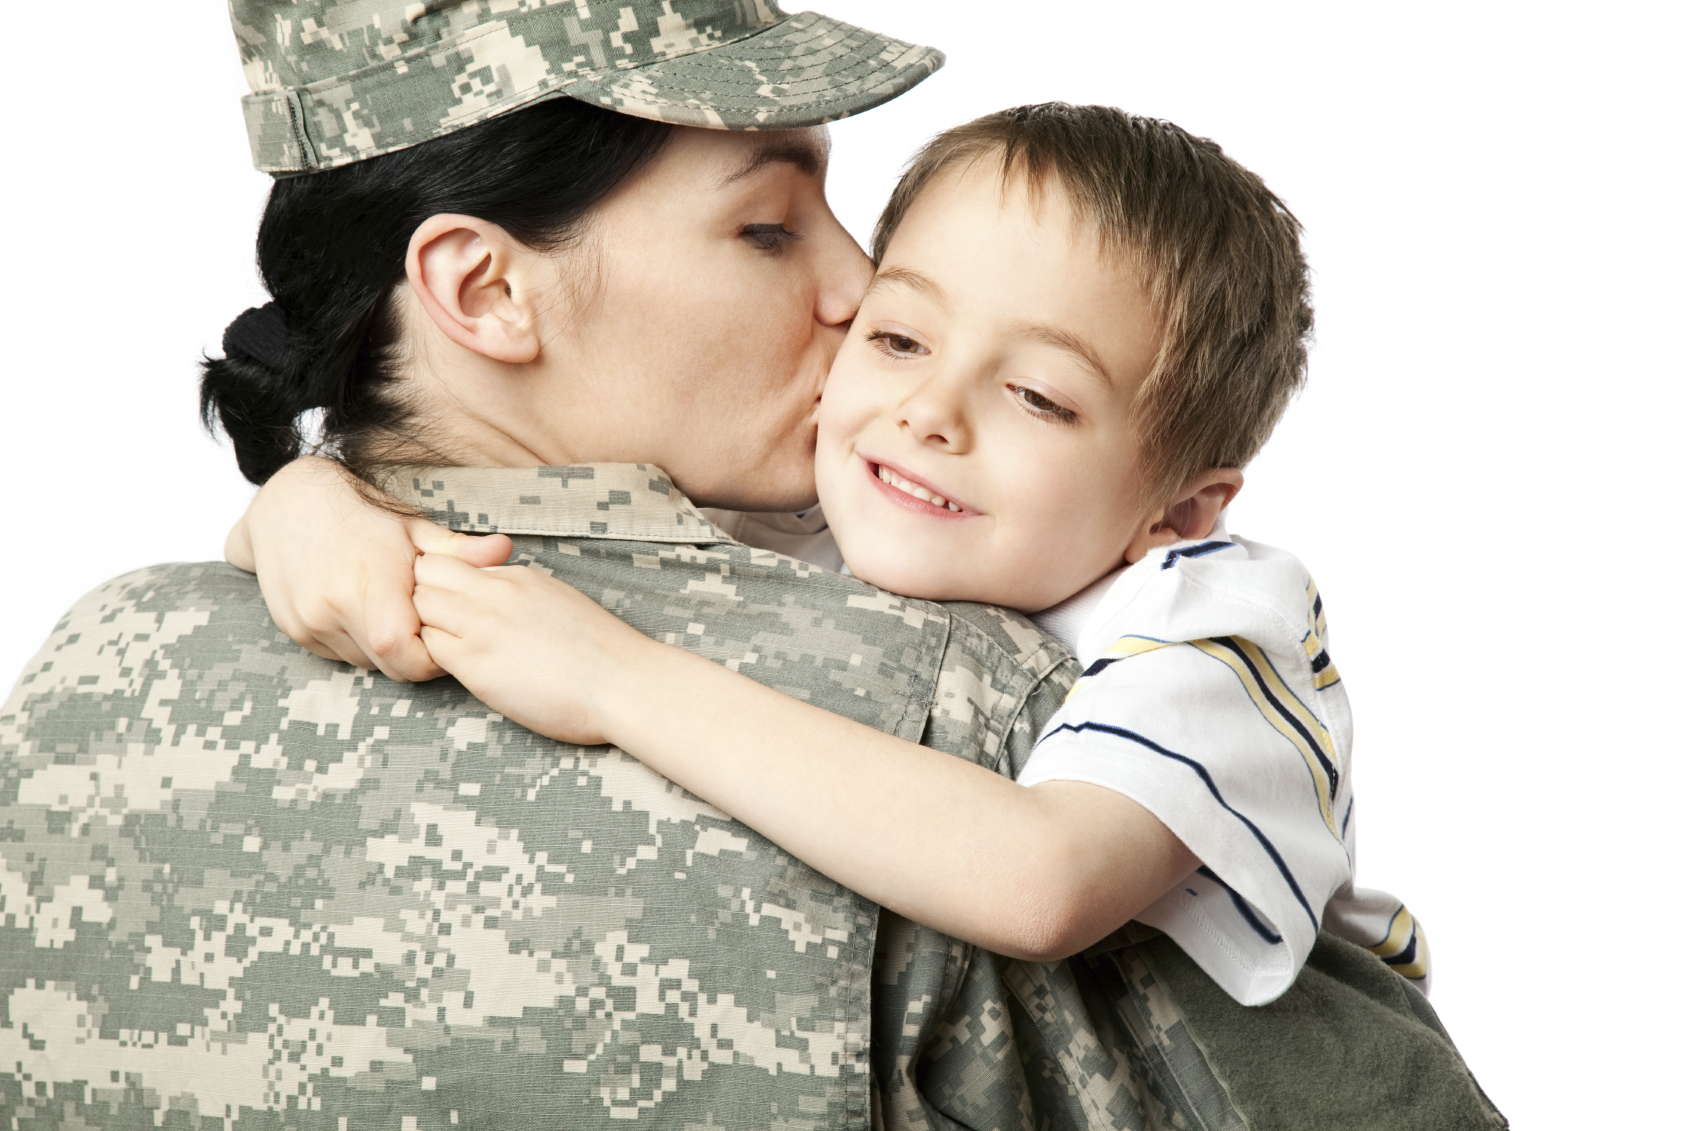 Female veteran in uniform kissing child on the cheek.